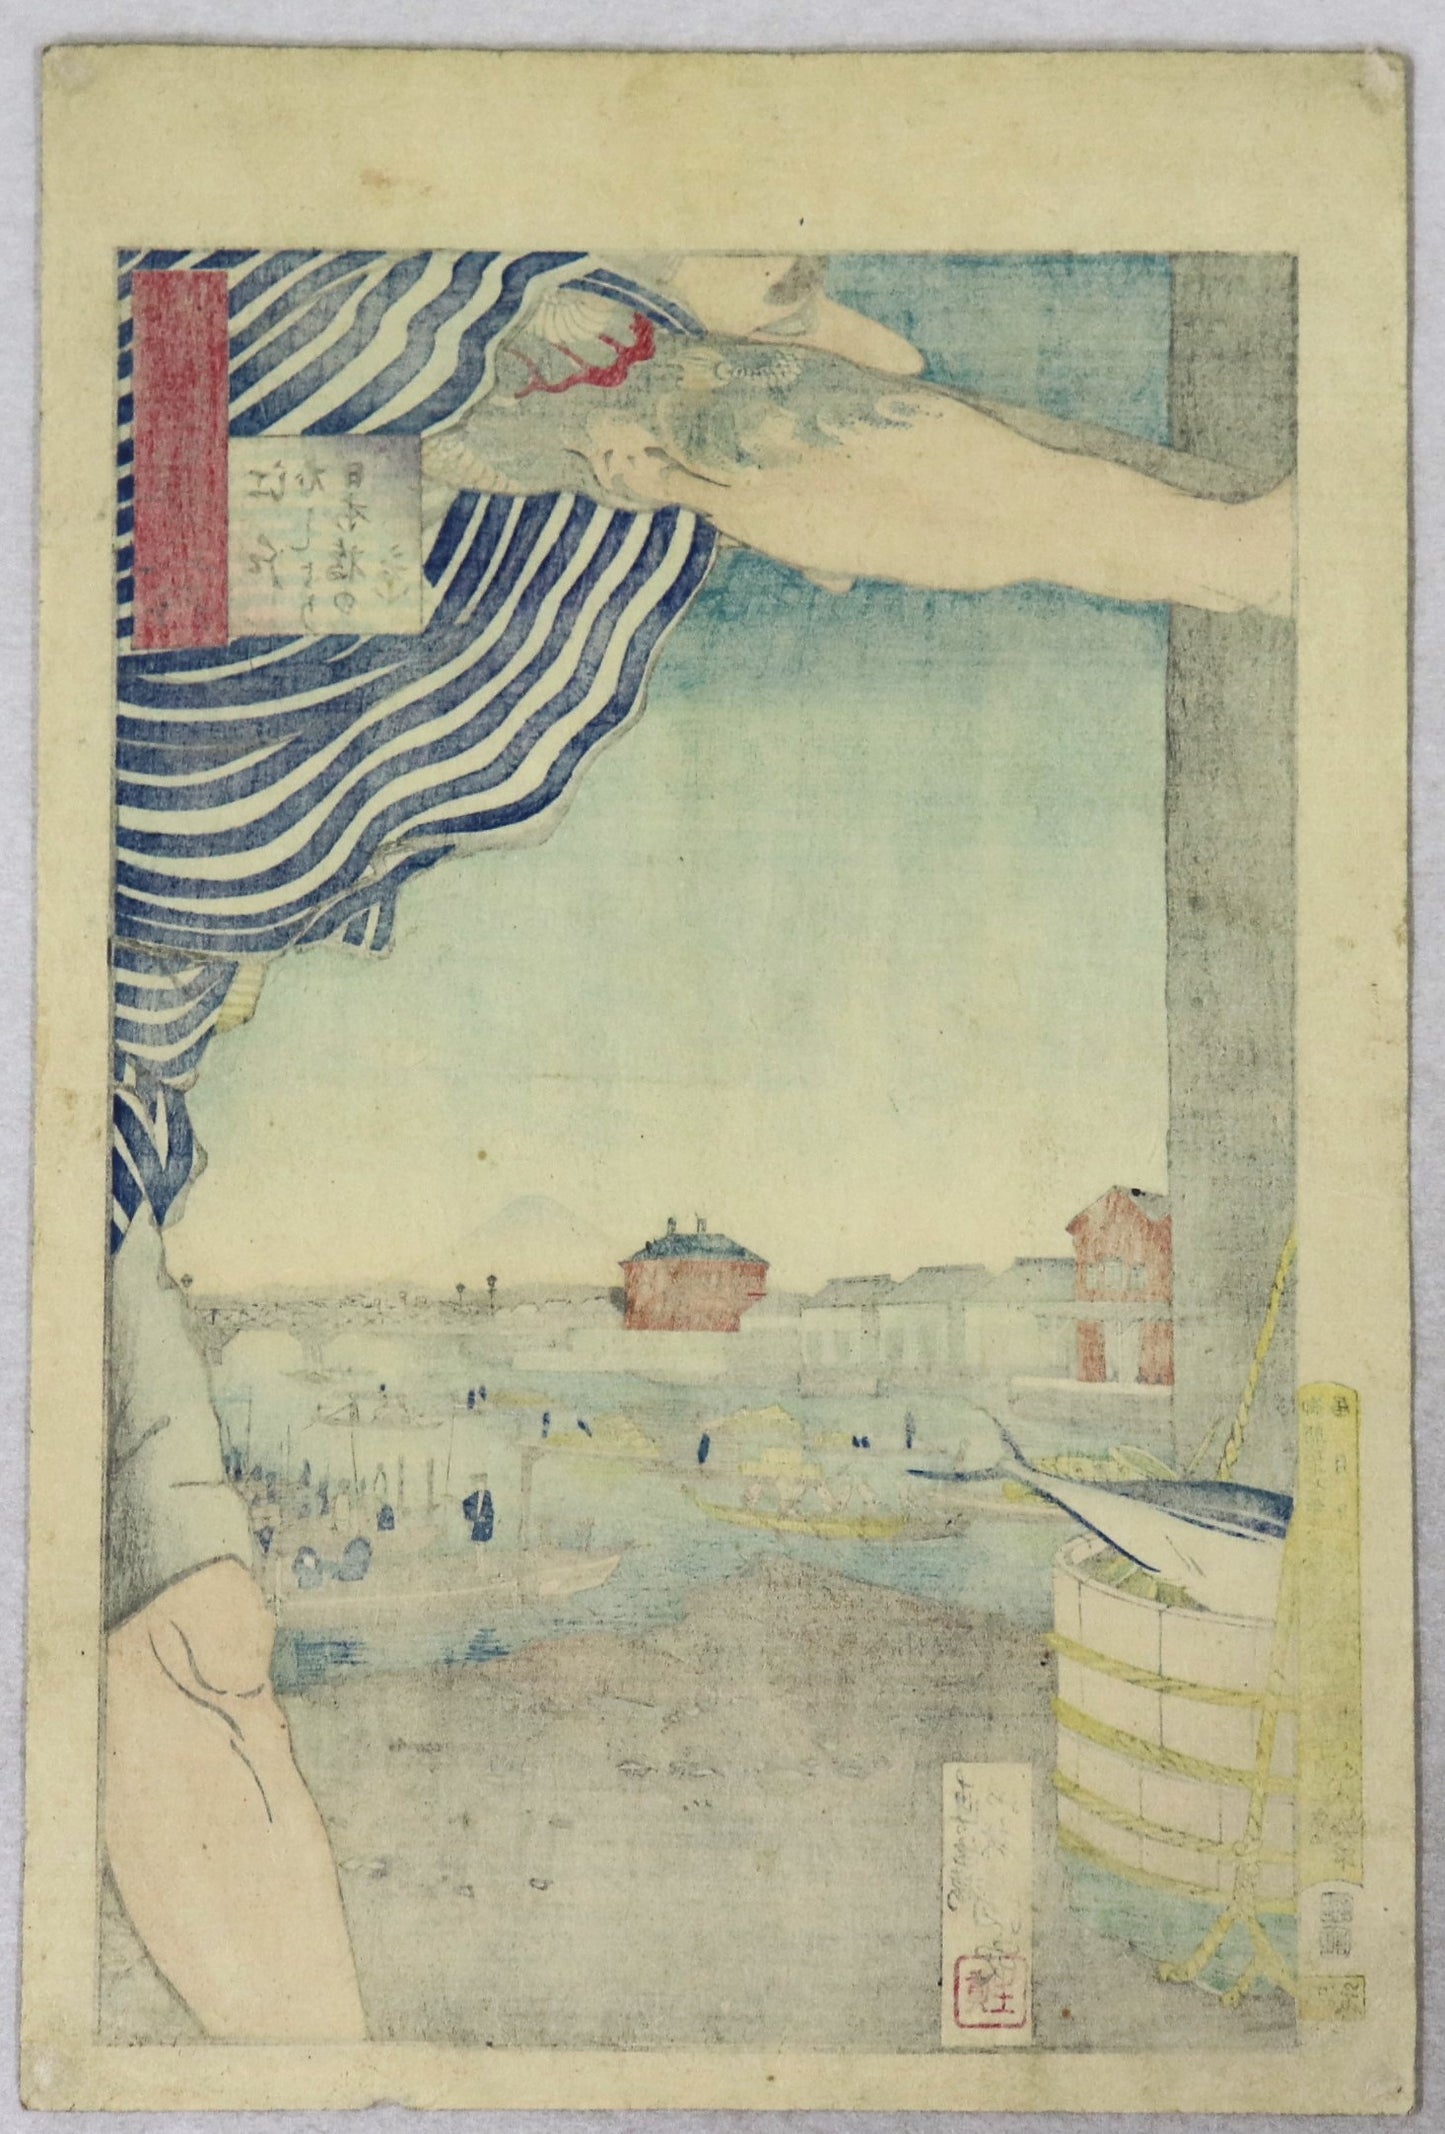 View from Edobashi's bridge to Nihonbashi's bridge from the series "One hundred Views of Musashi" by Kiyochika / La Vue du pont d'Edobashi au pont de Nihonbashi de la série " Cent Vues de Musashi " par Kiyochika ( 1884)